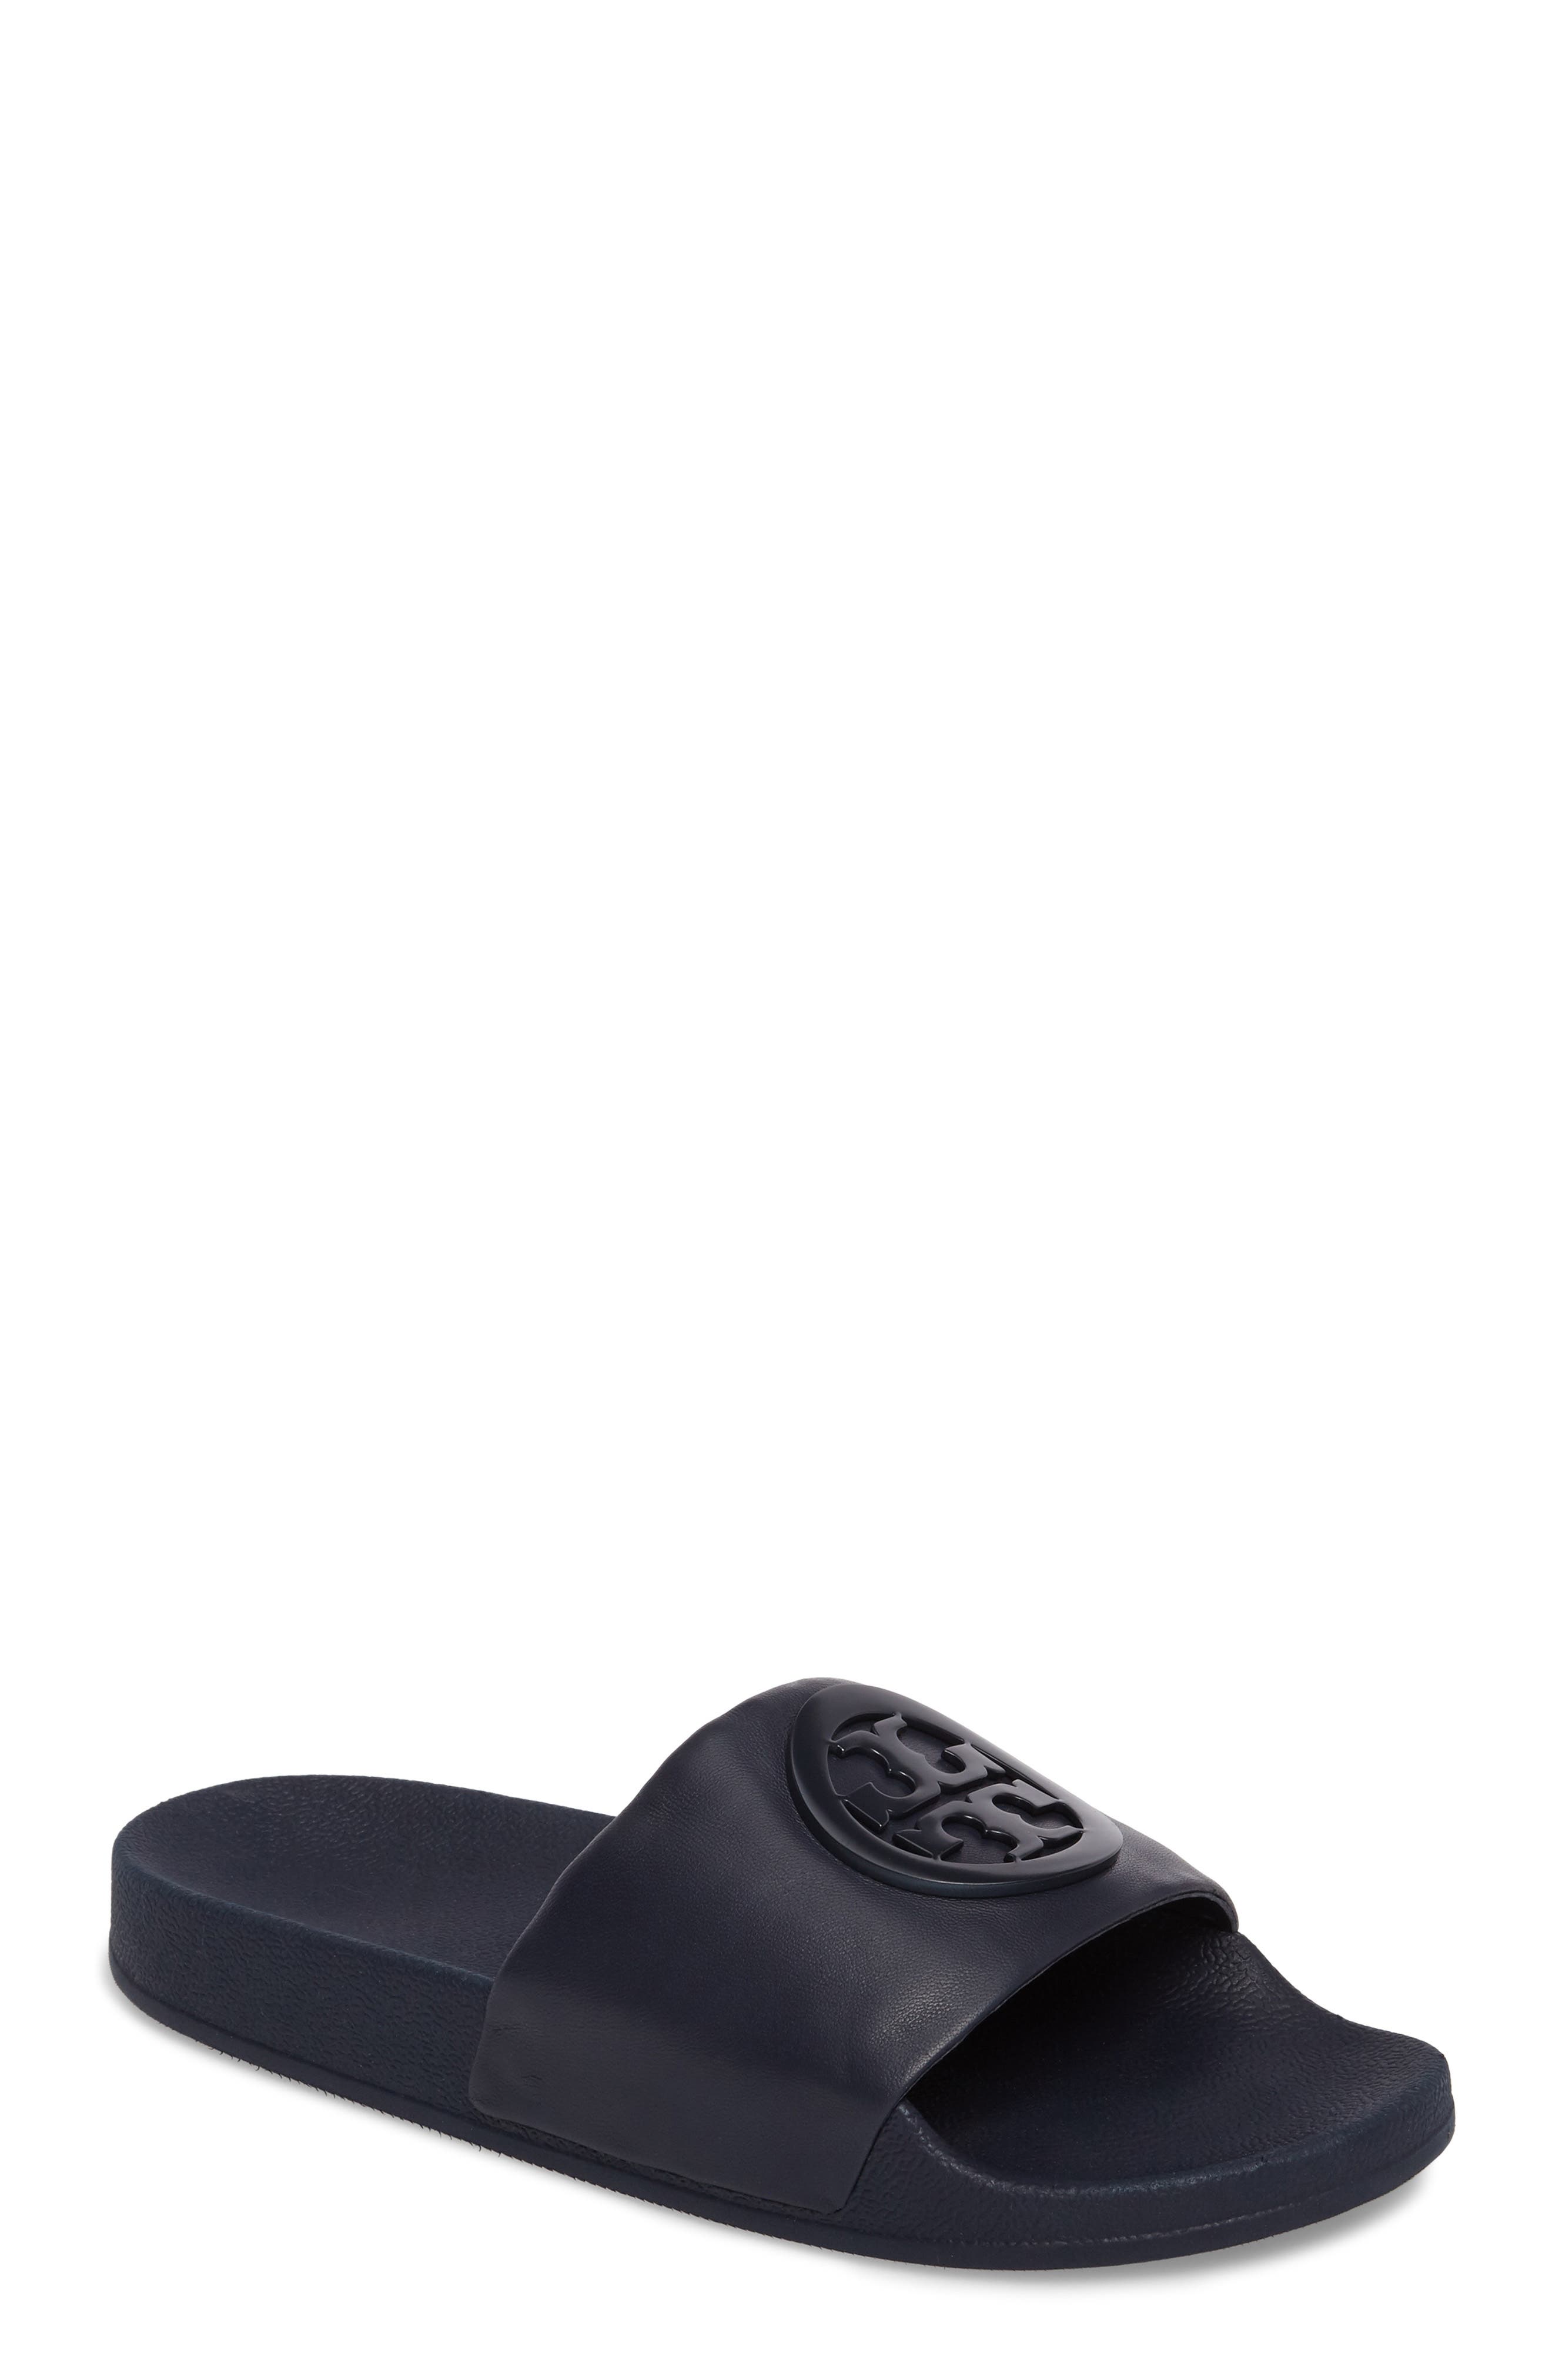 TORY BURCH Women'S Lina Leather Pool Slide Sandals, Royal Navy | ModeSens